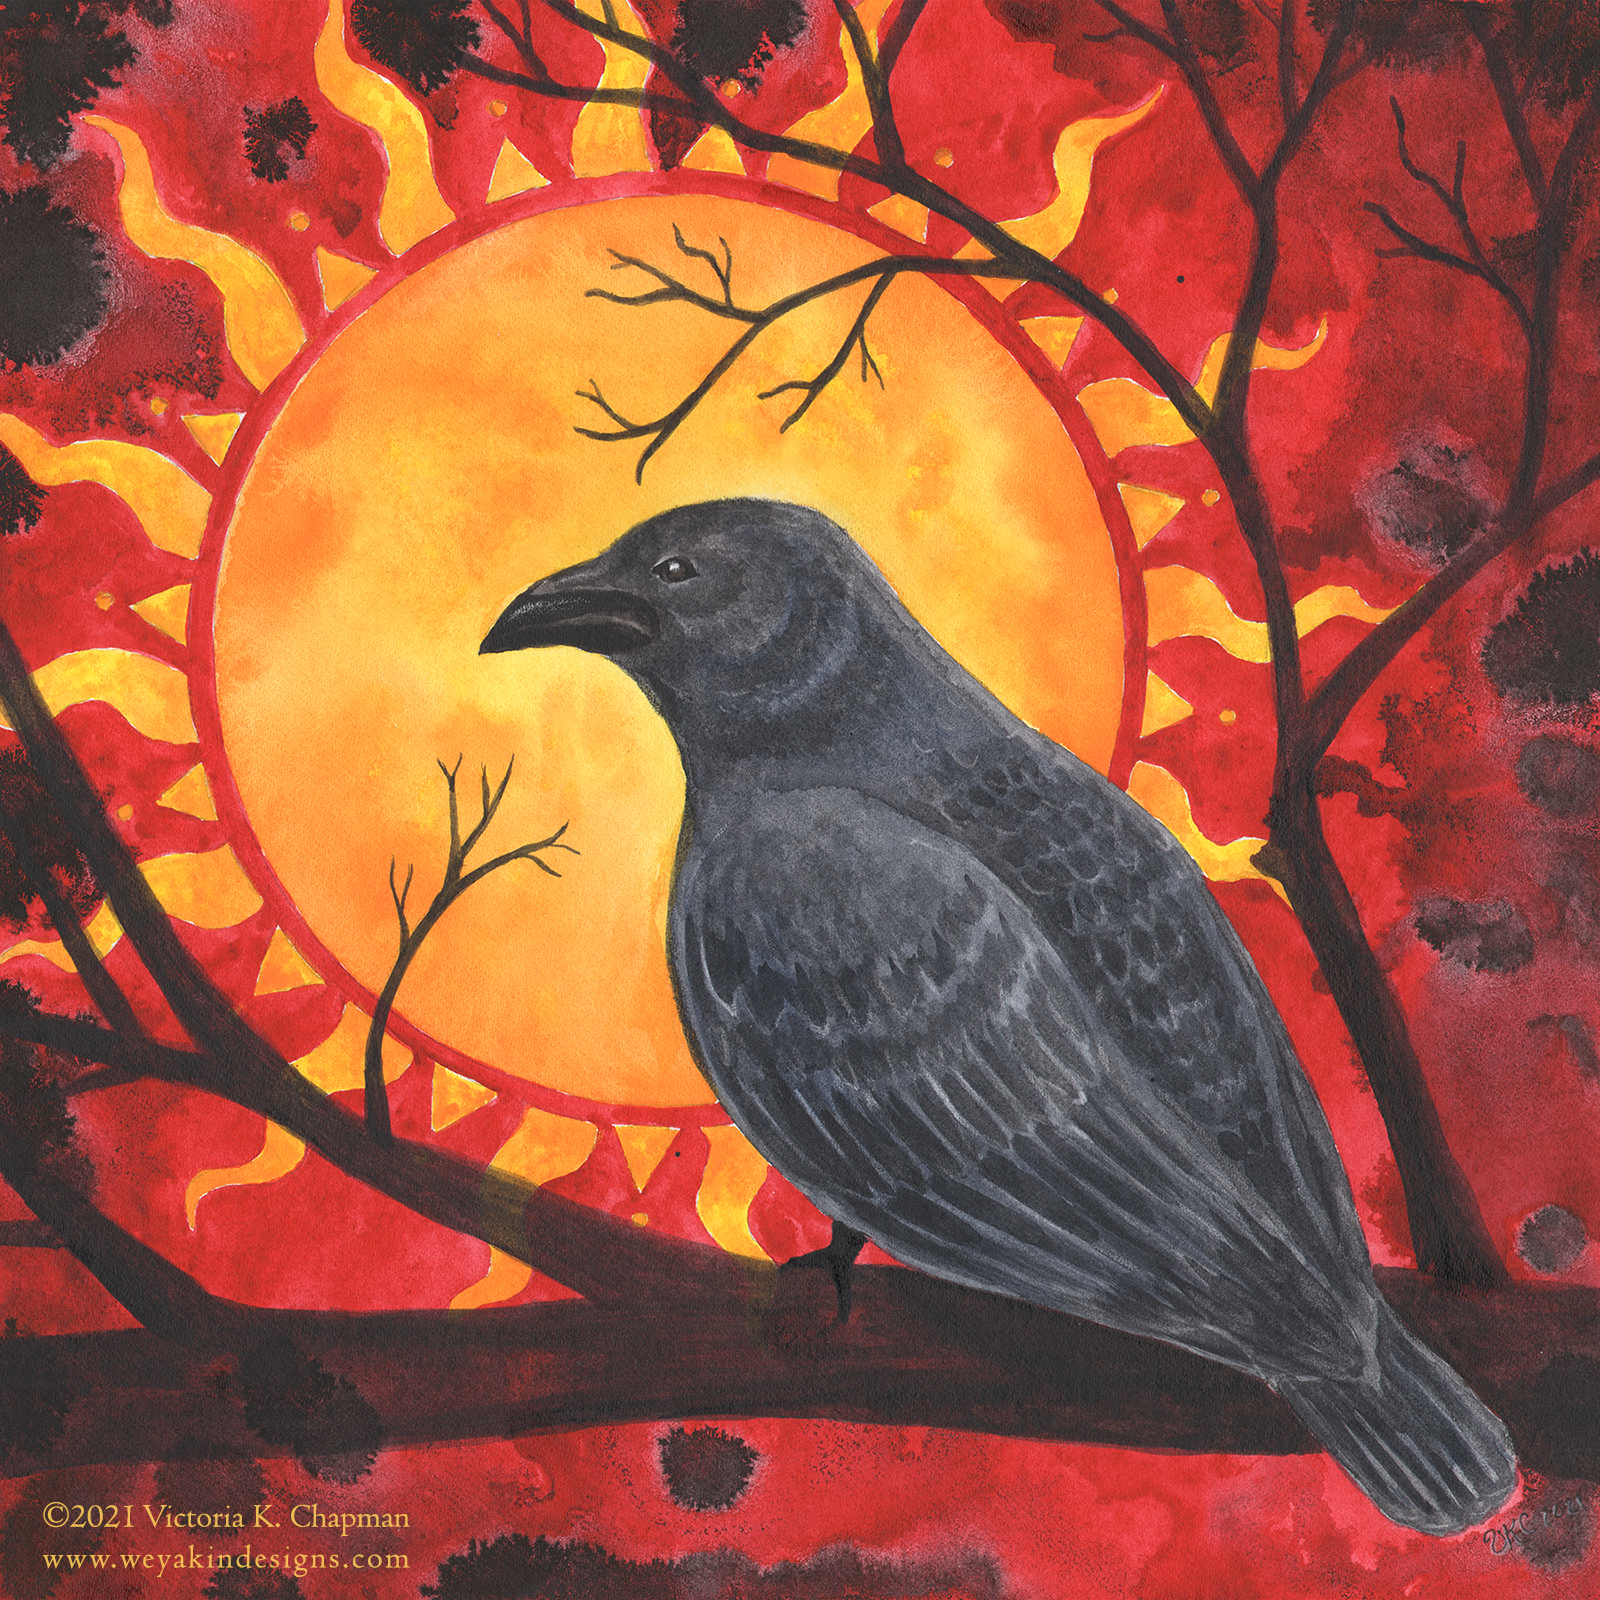 "Sun of Corvus" black crow and sun original art print.